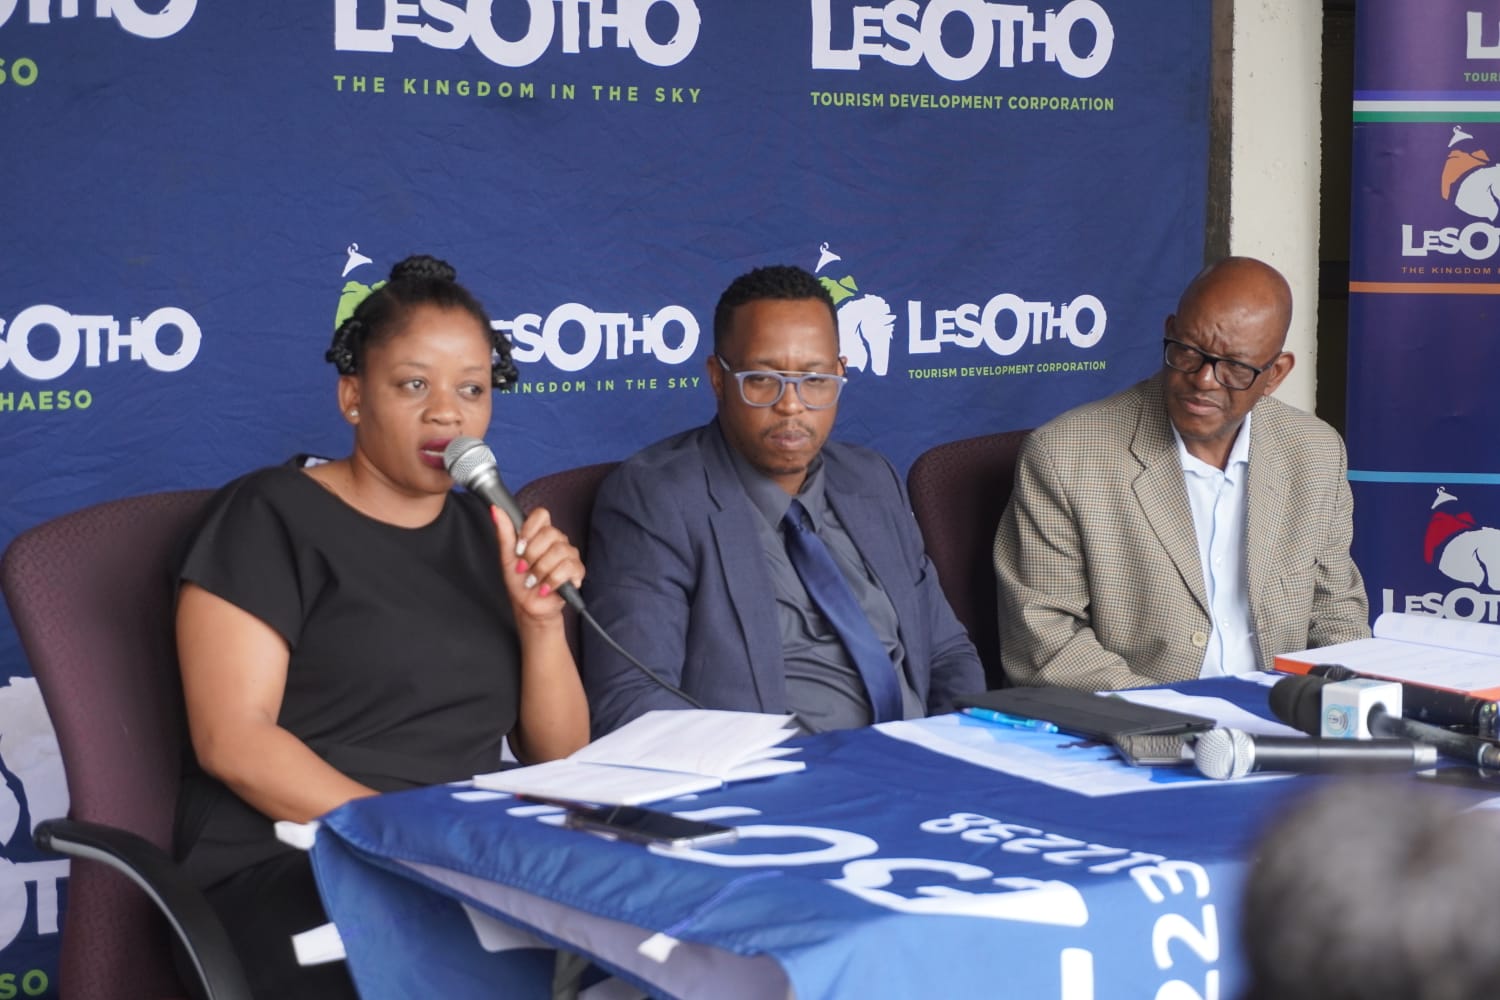 functions of lesotho tourism development corporation